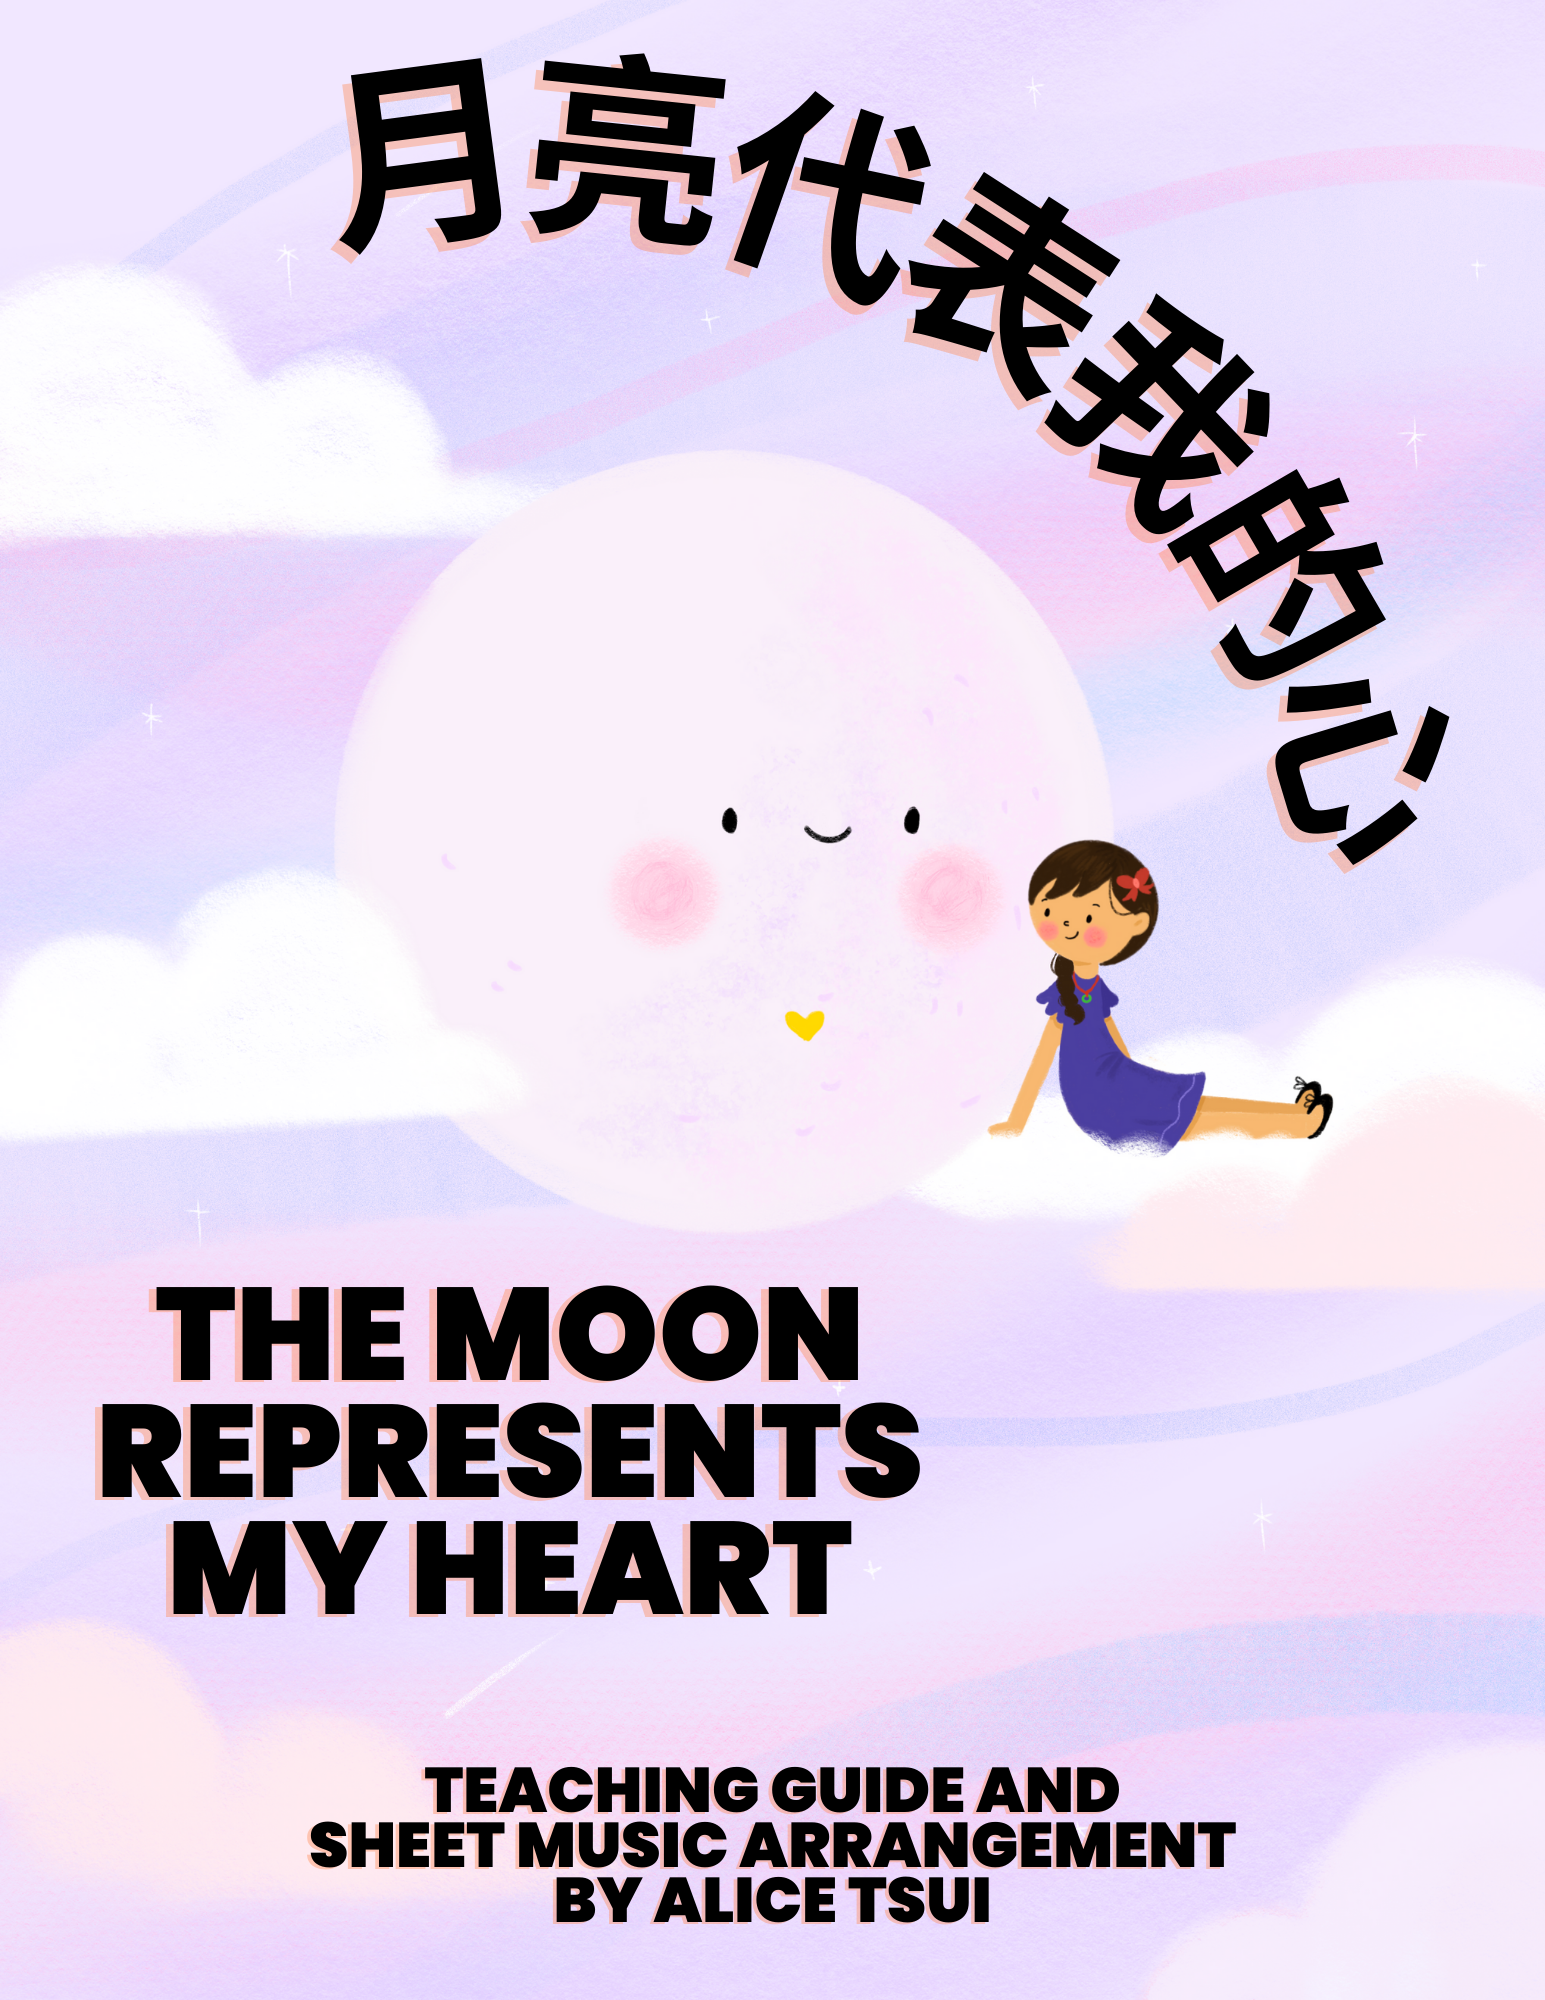 The moon represents